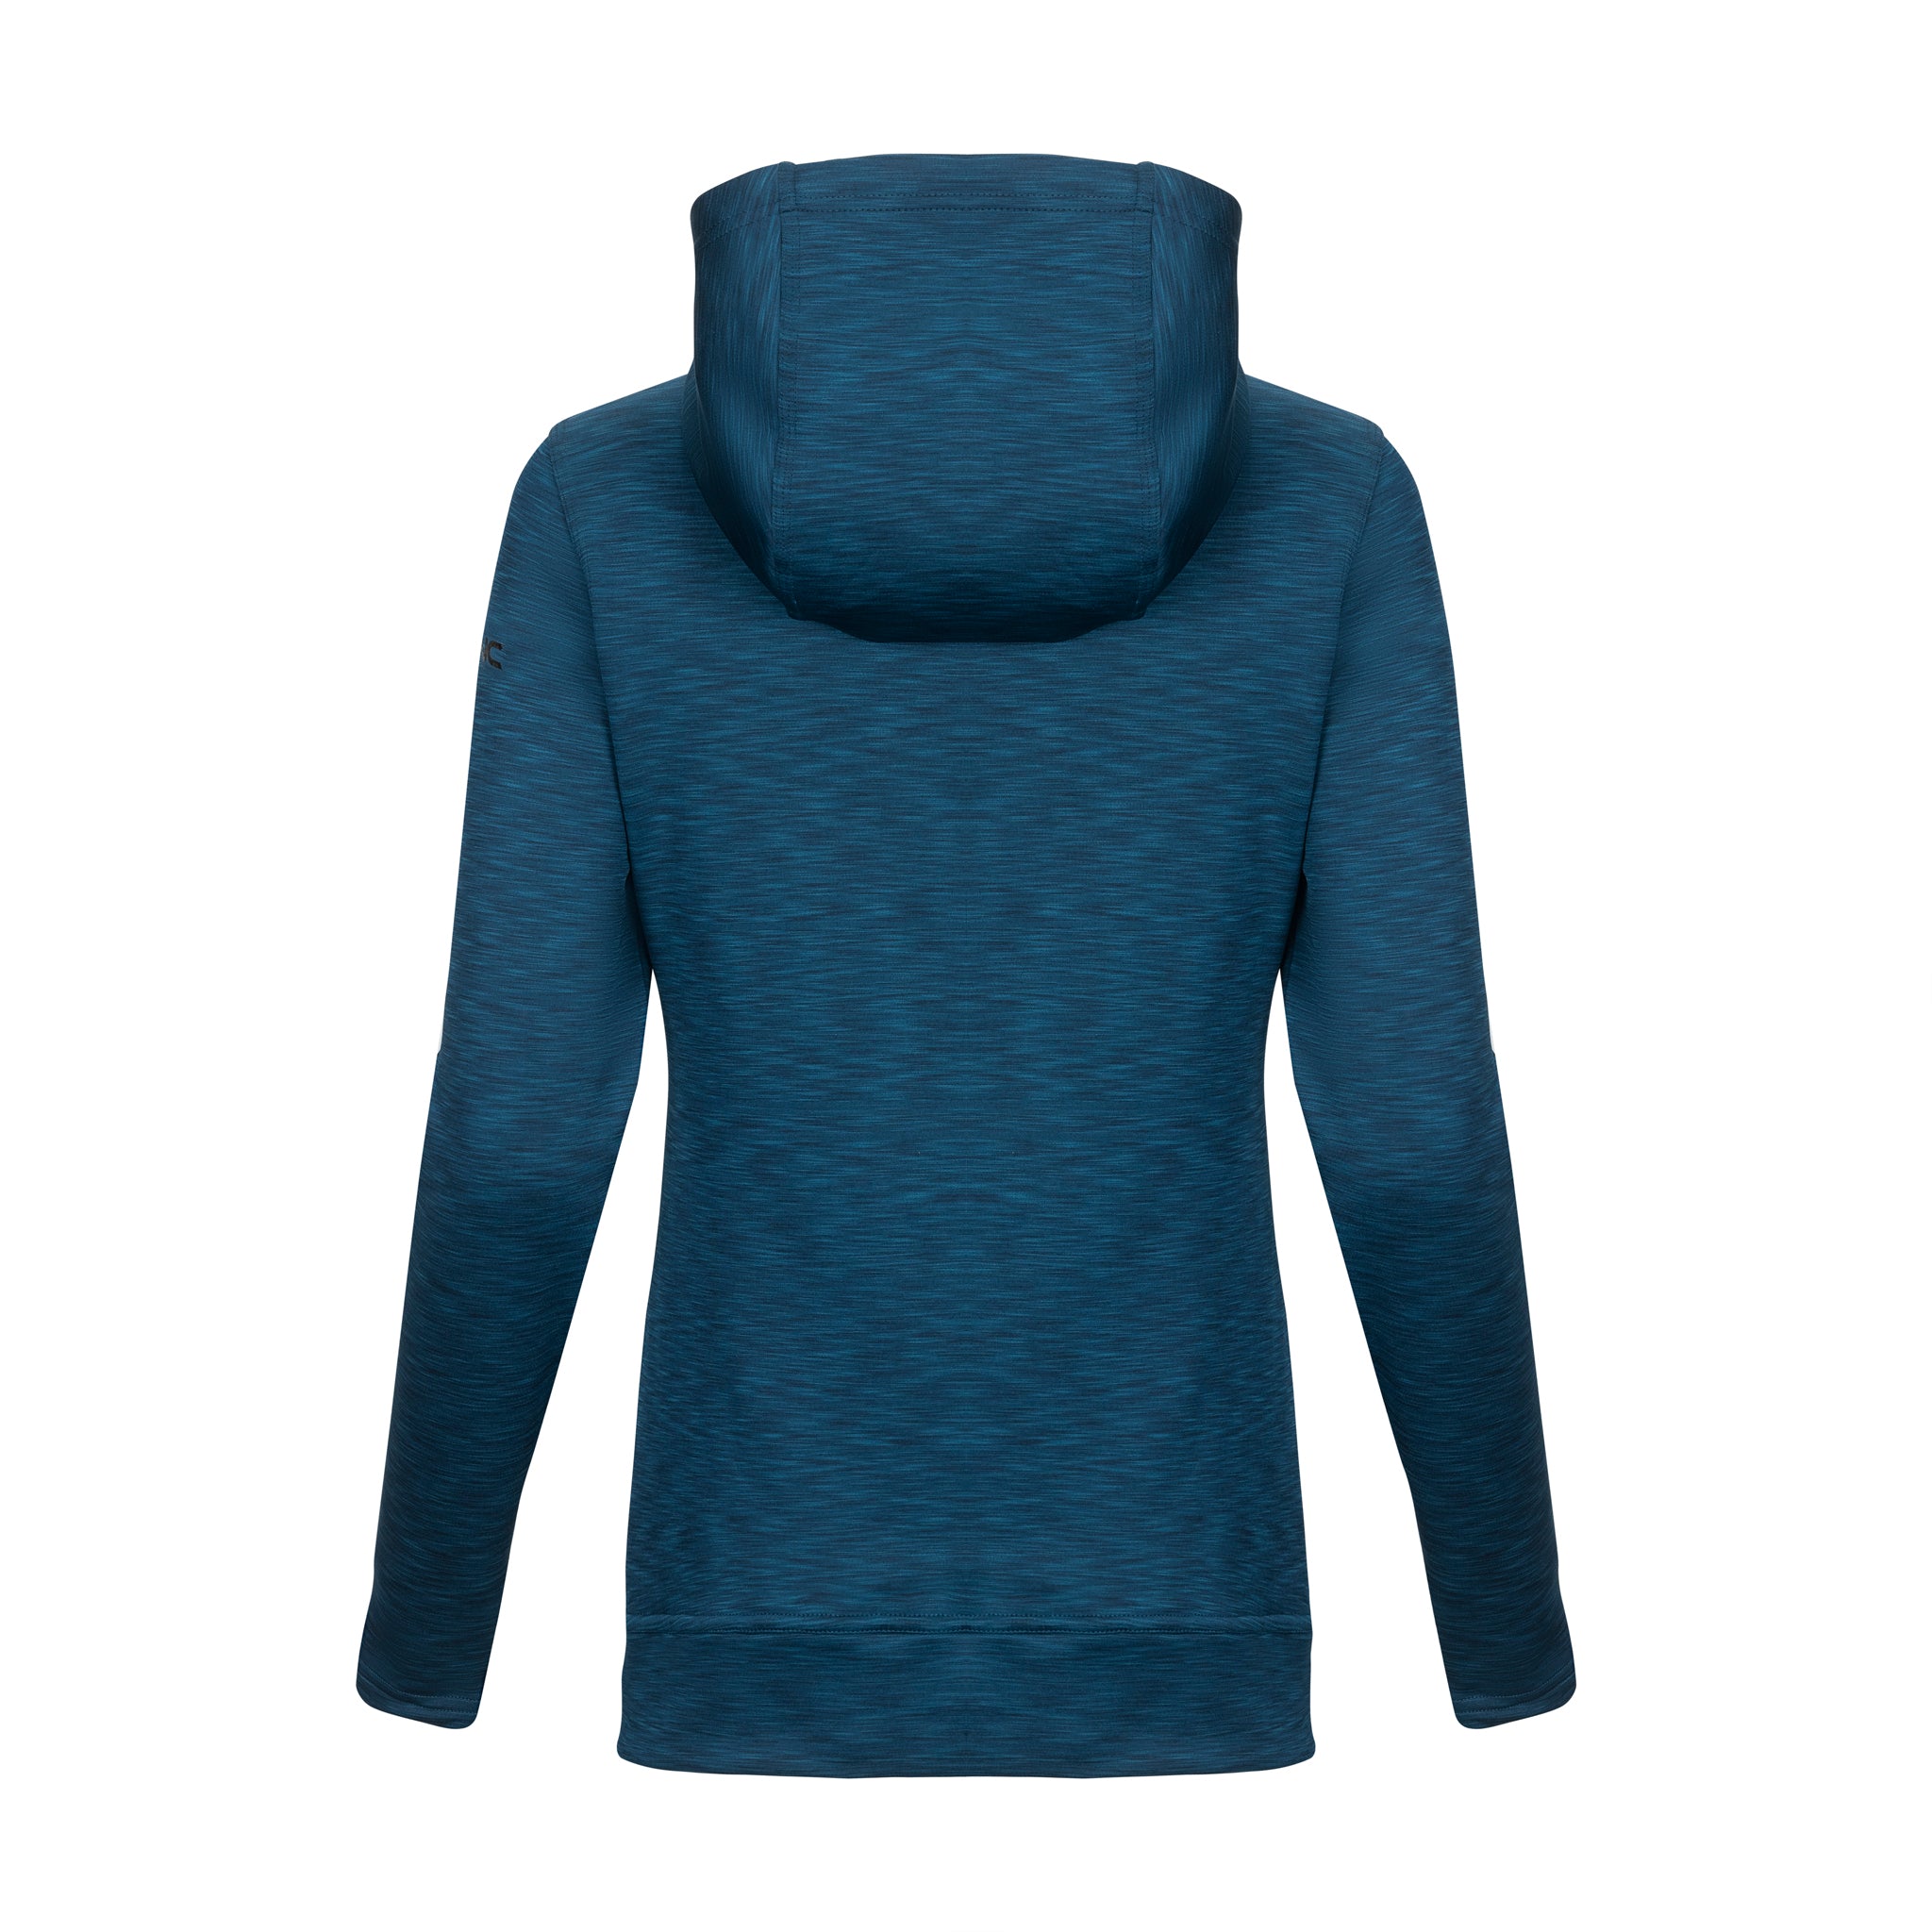 sync-performance-women's-benchmark-hoodie-stellar-blue-back